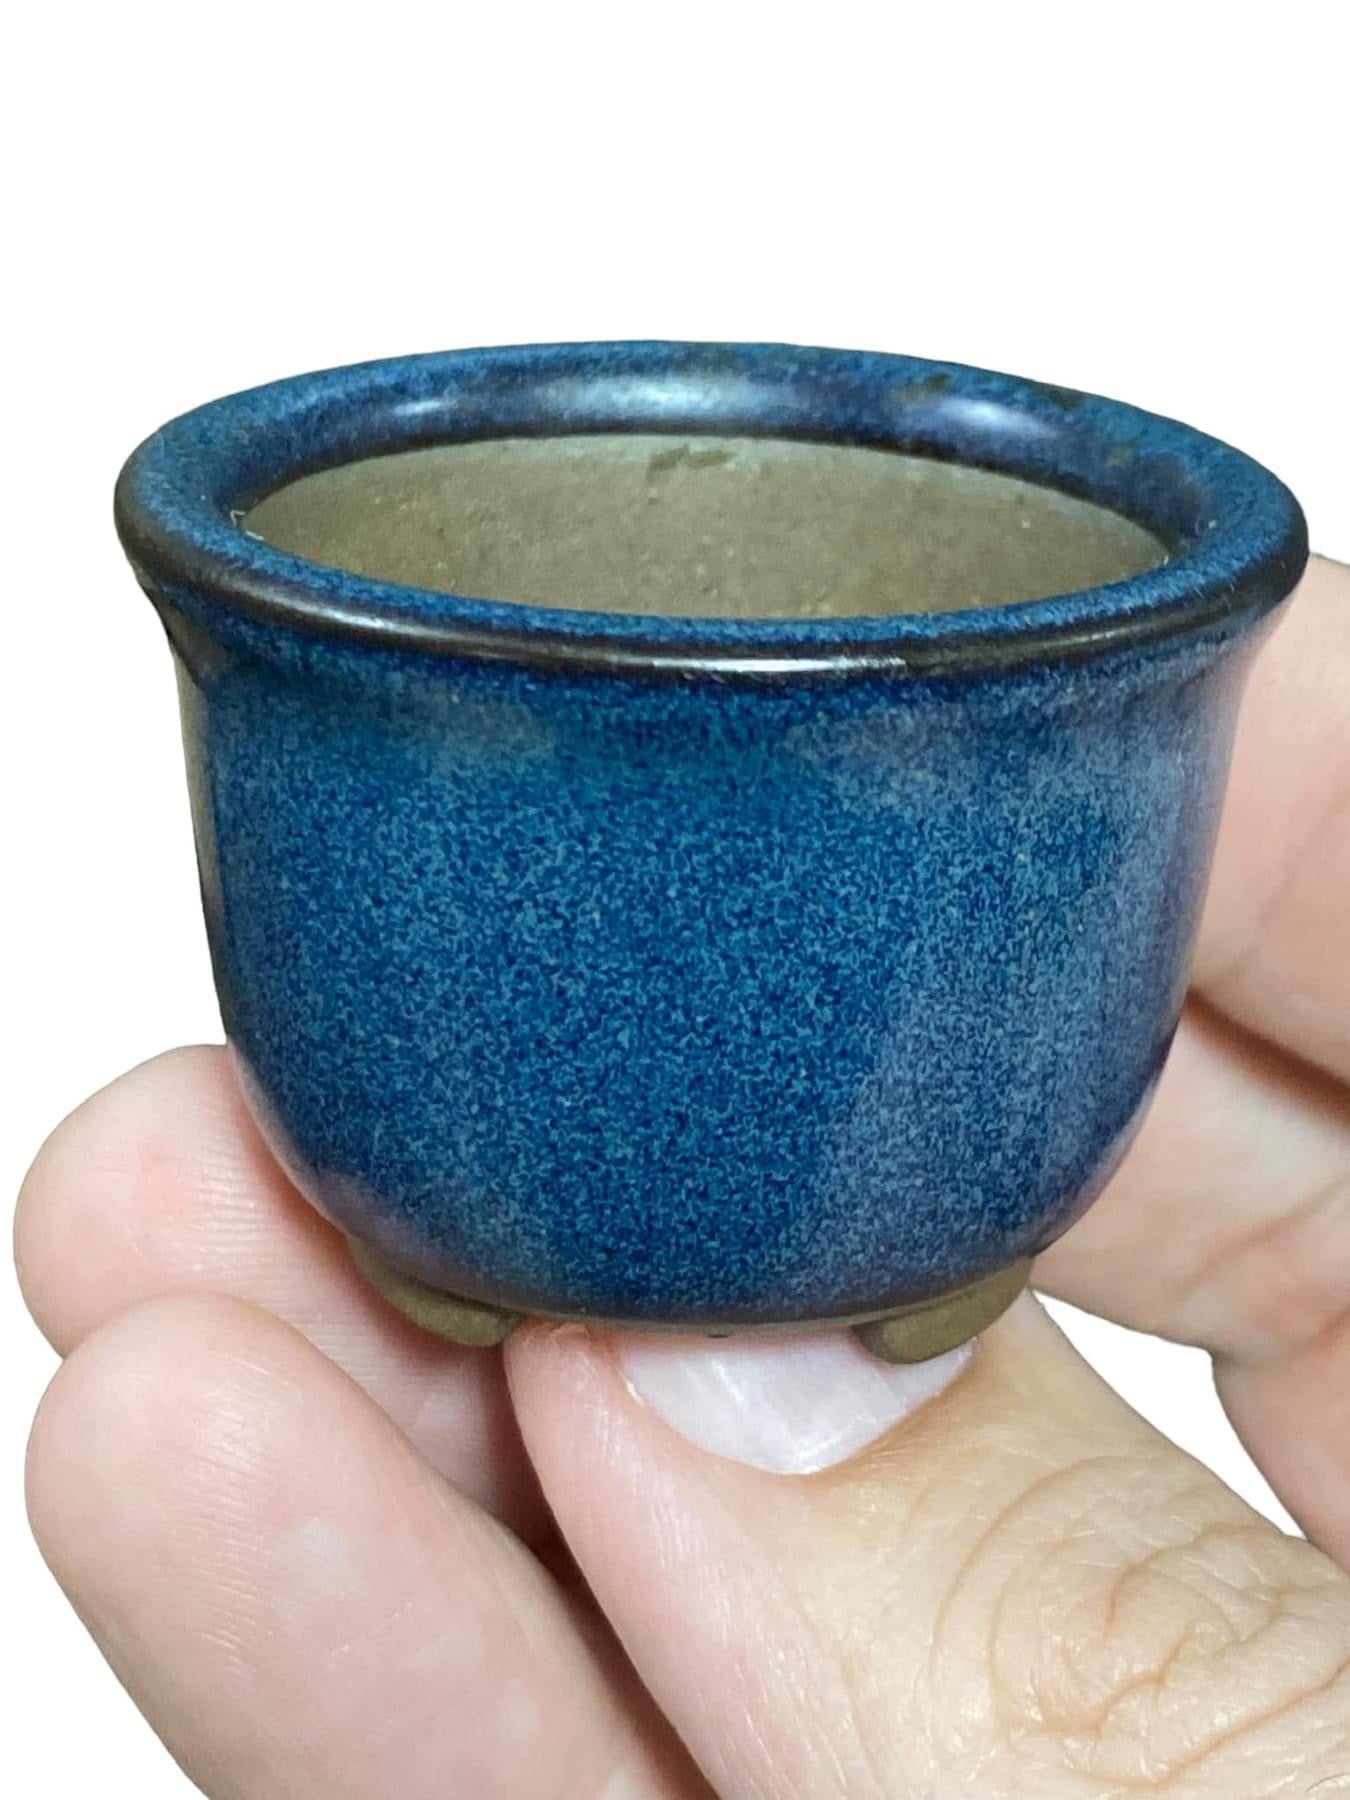 Japanese - Blue Glazed Round Bonsai Pot from Japan